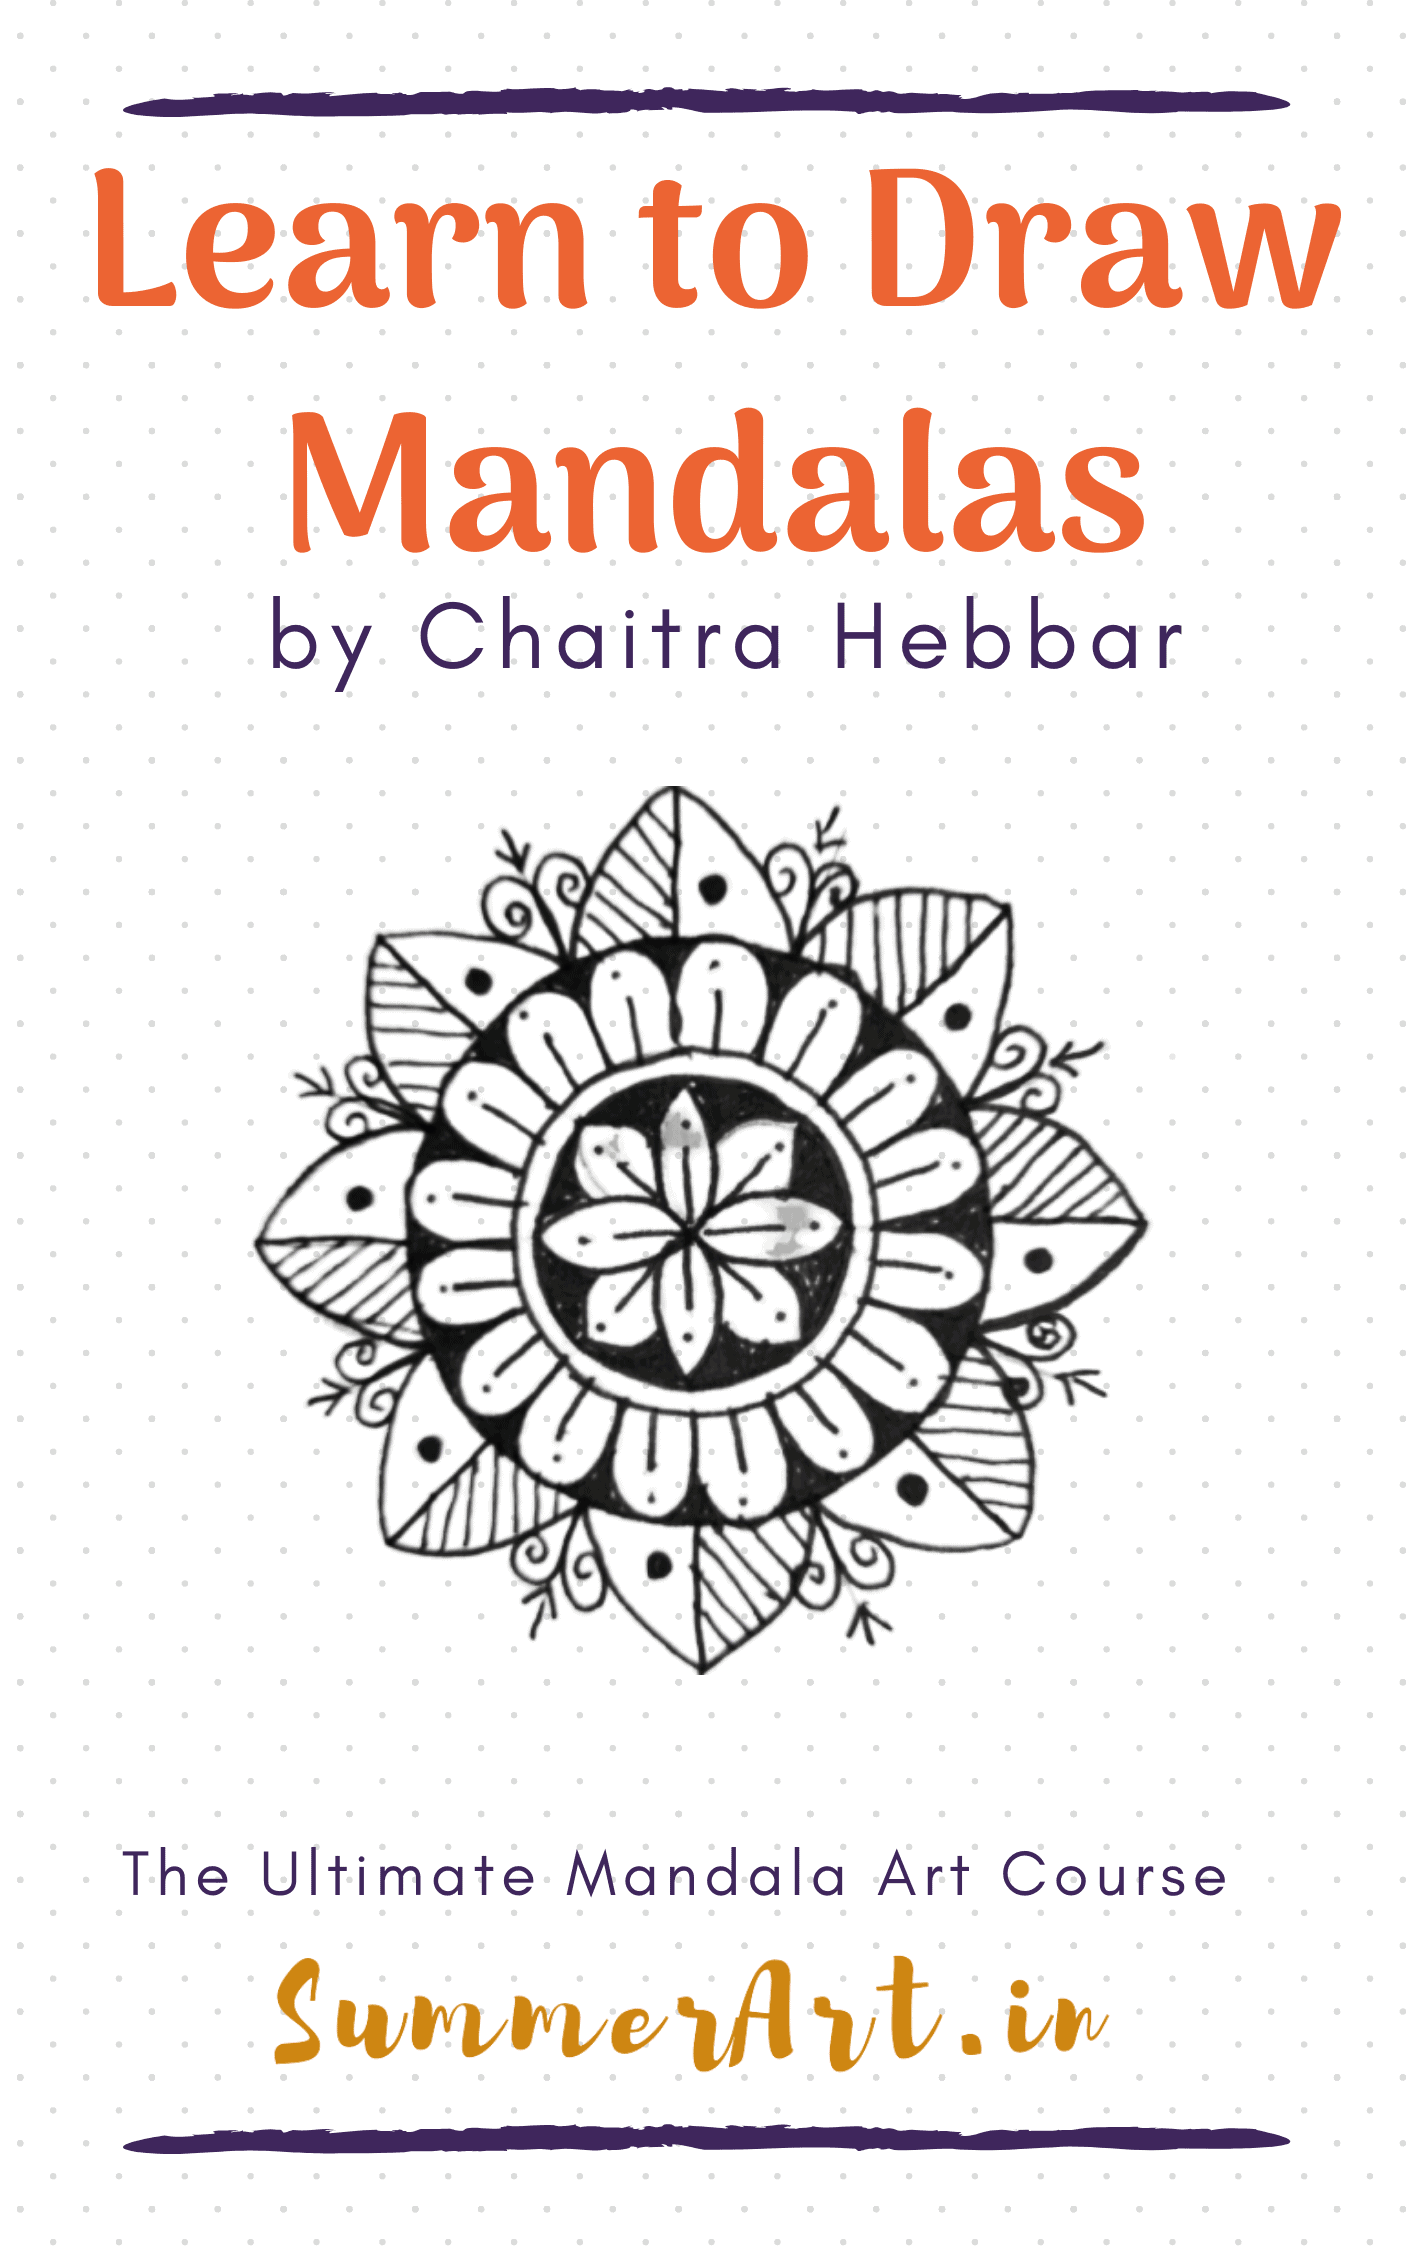 Mandala Drawing Course